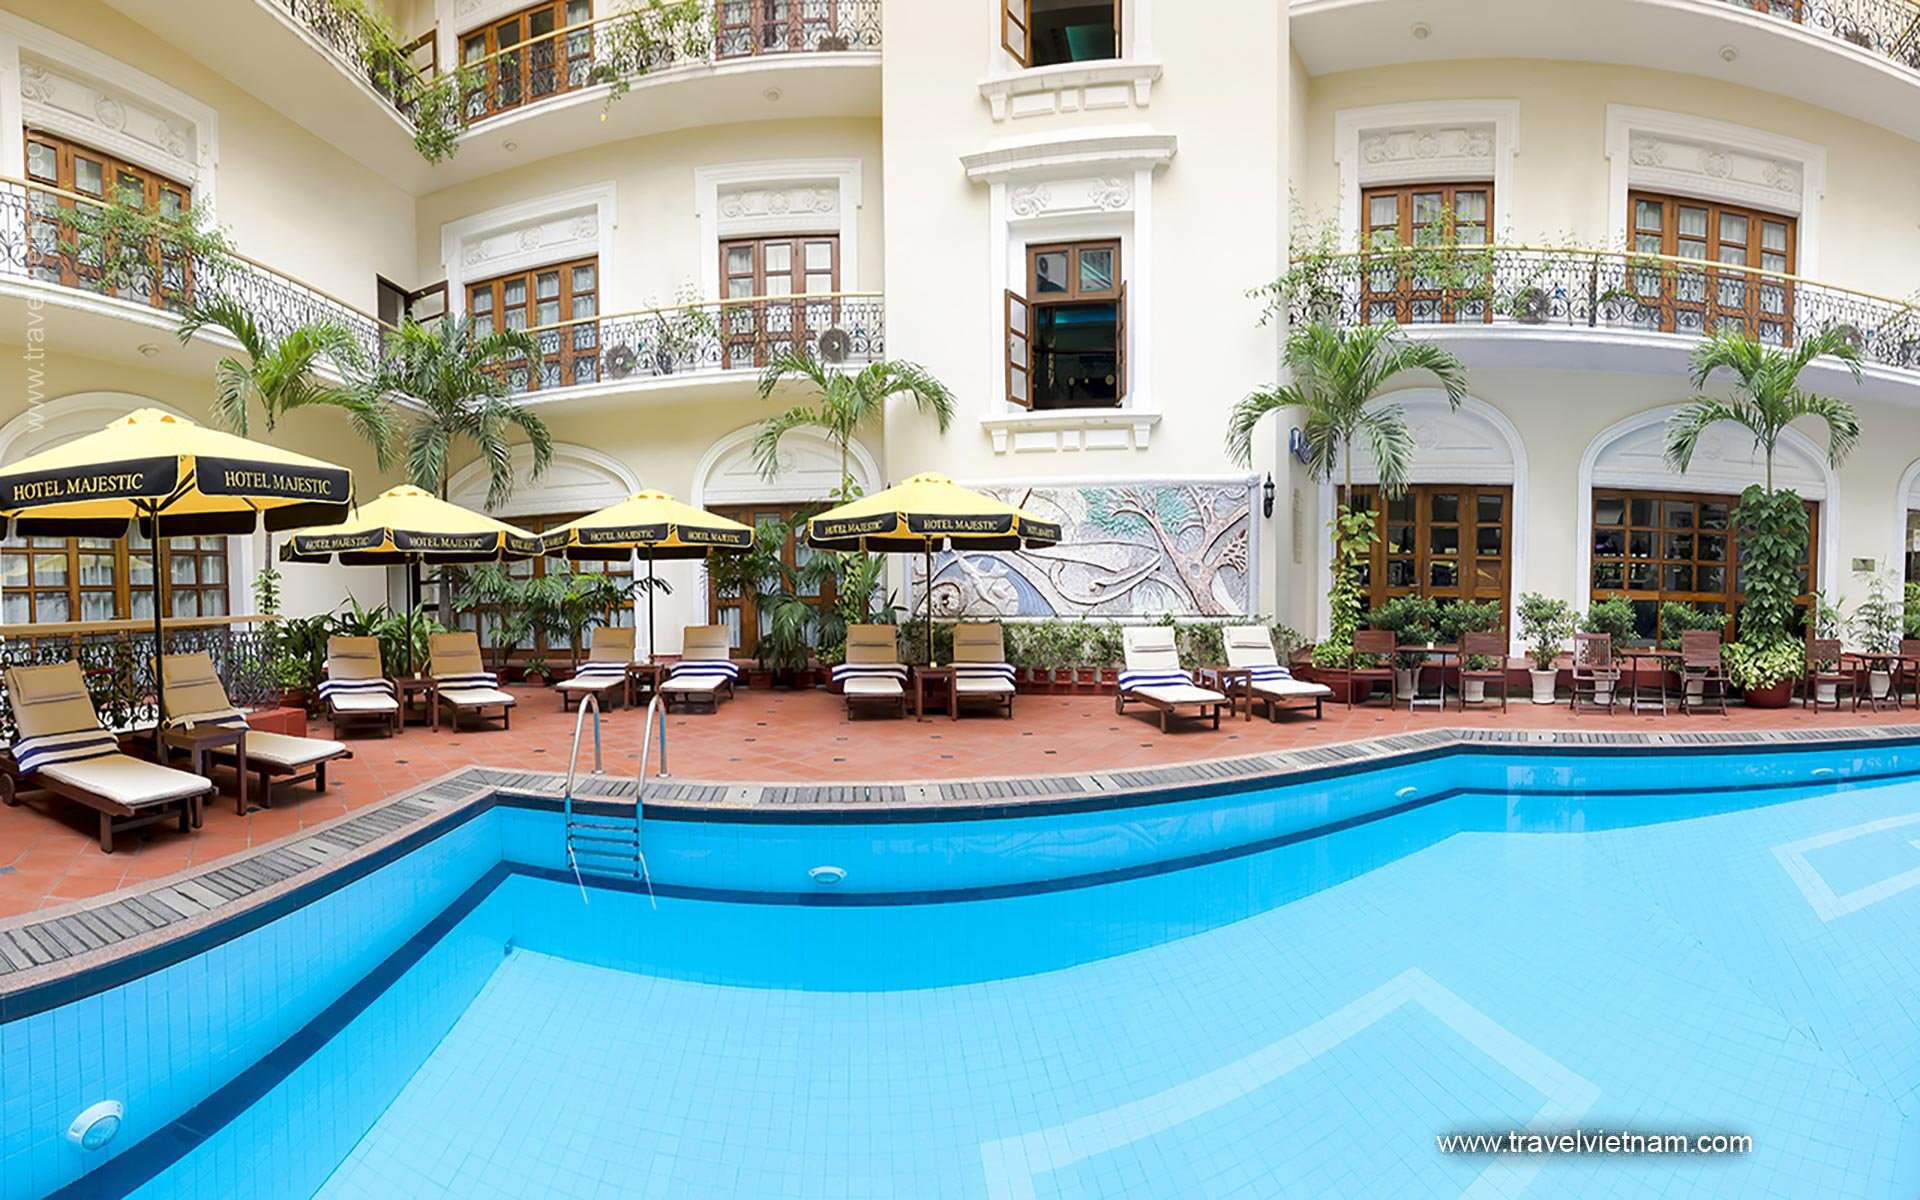 Hotel Majestic Saigon, Ho Chi Minh City, Vietnam 